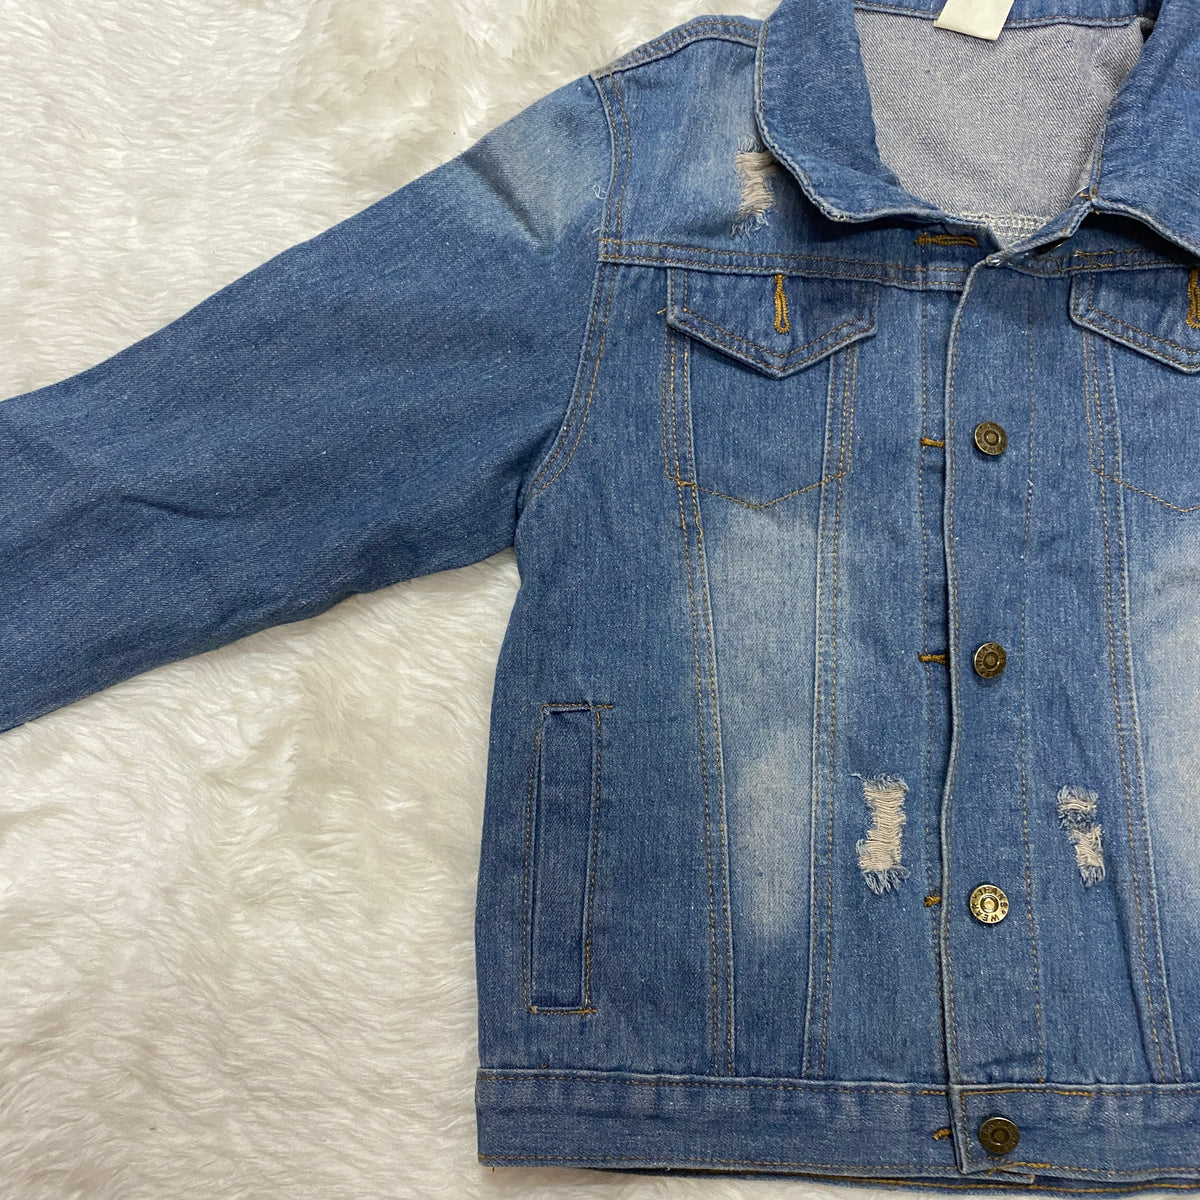 Vintage Ripped Denim Jacket